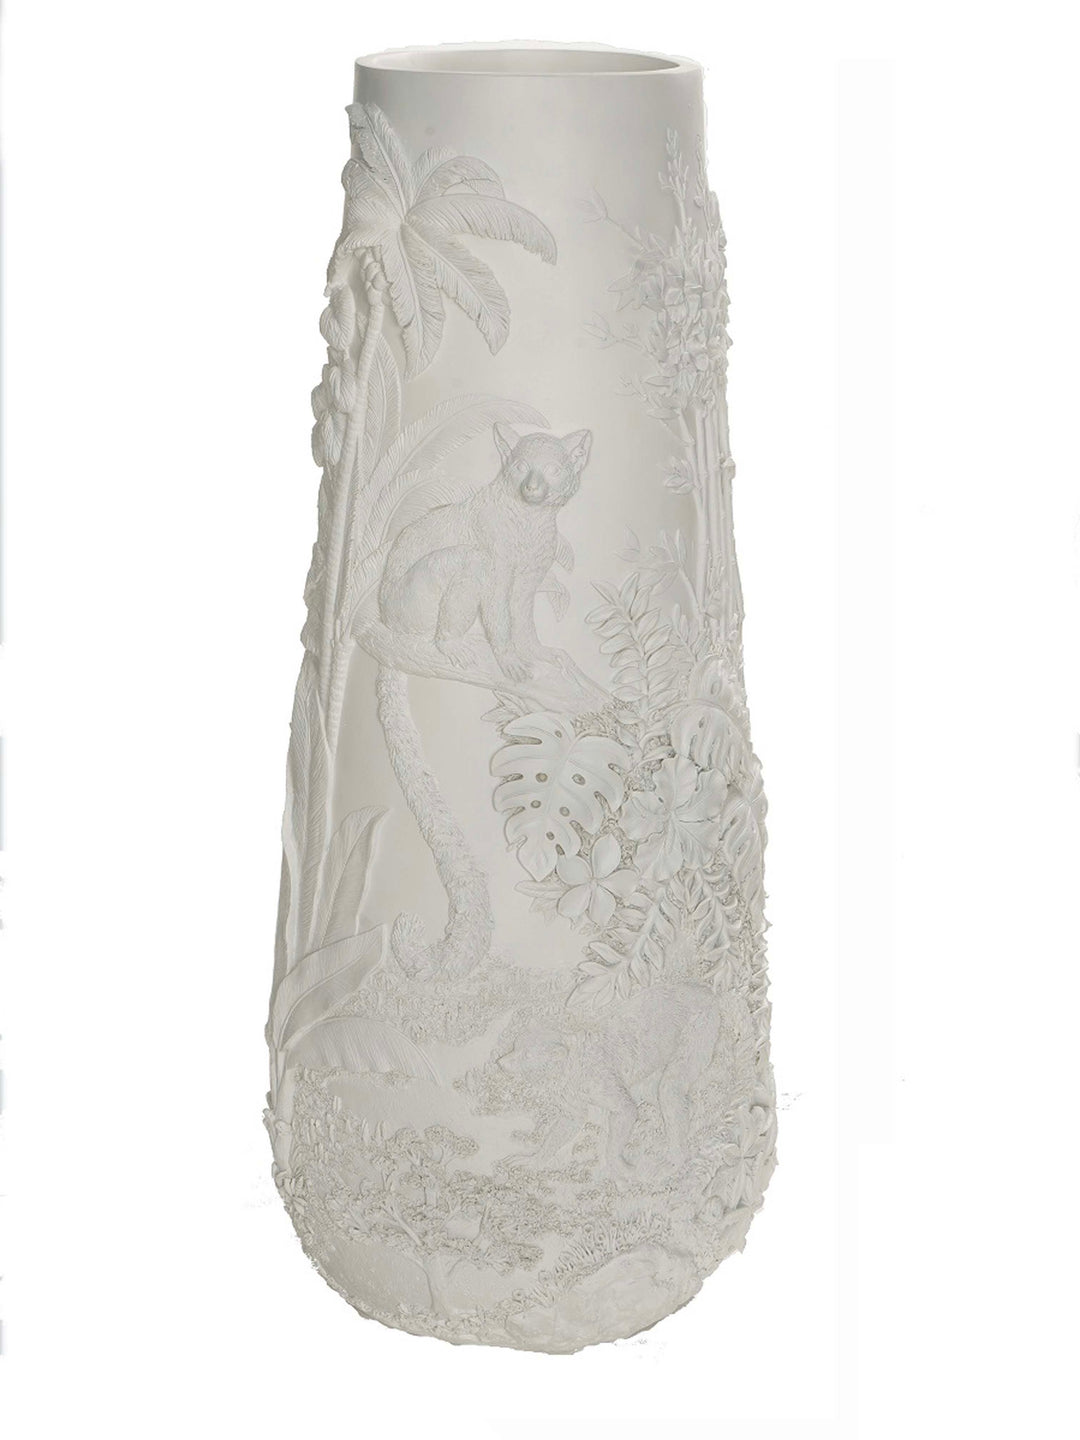 Handcrafted large decorative jungle themed vase white